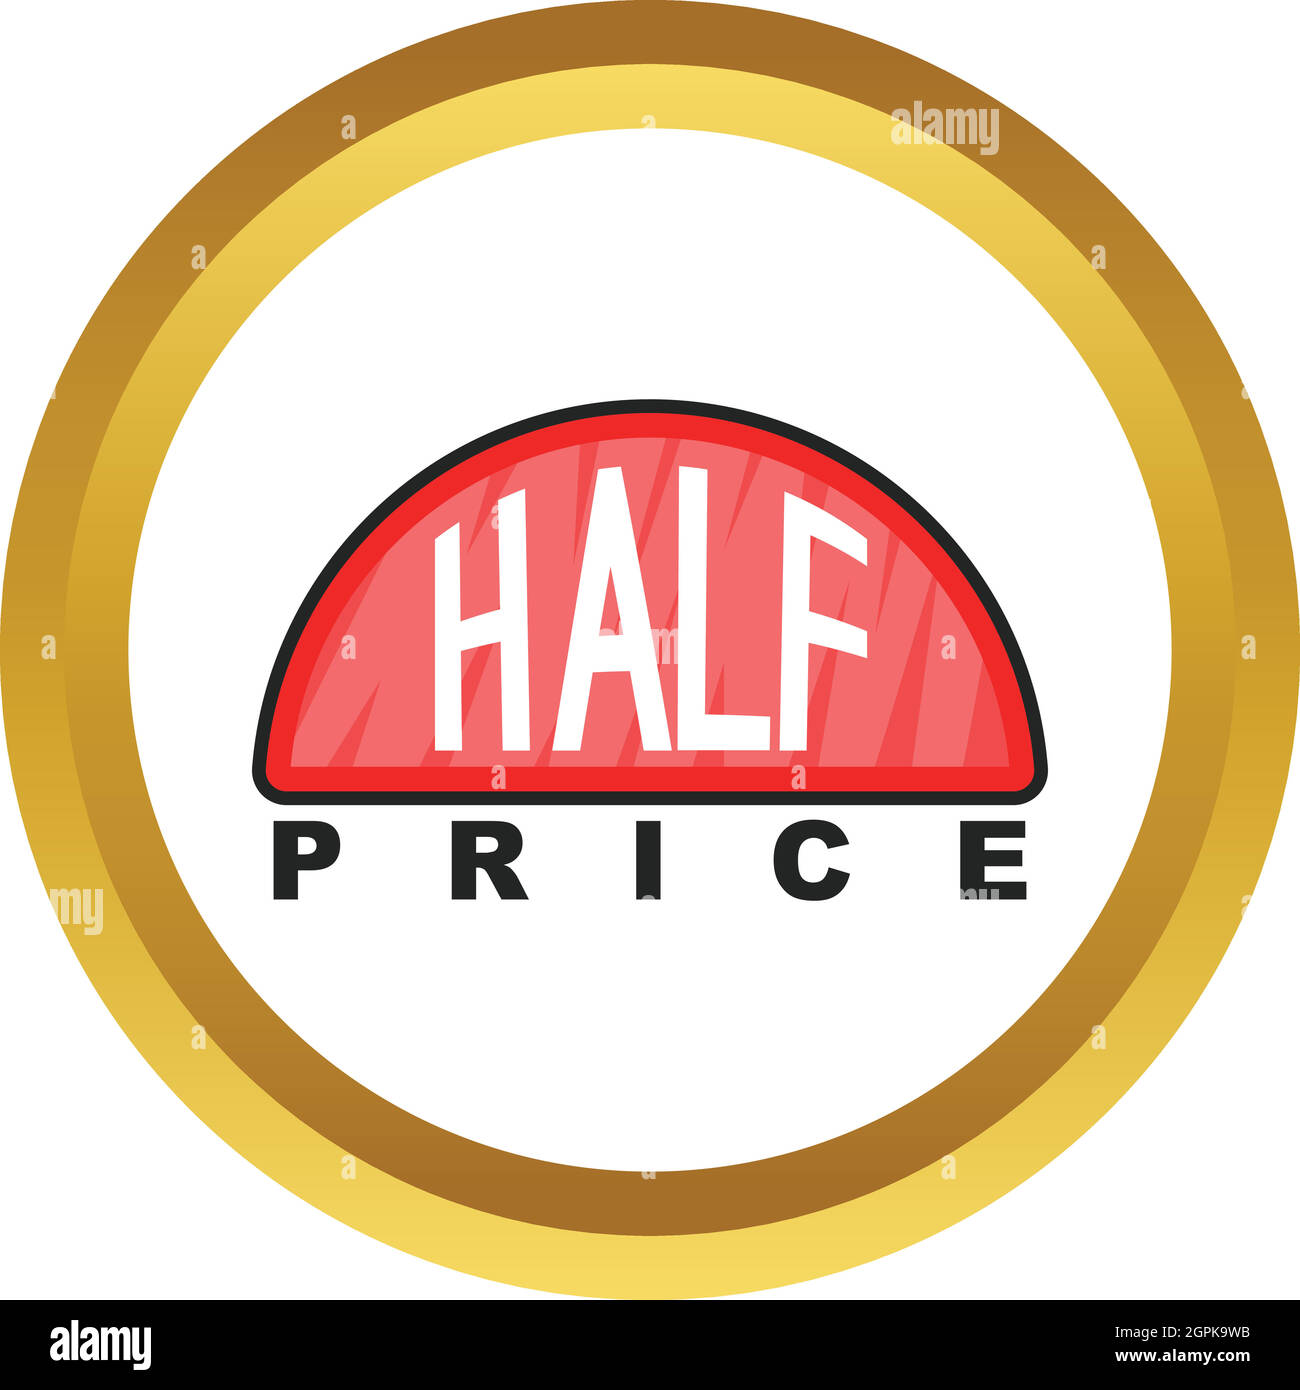 Half price label vector icon Stock Vector